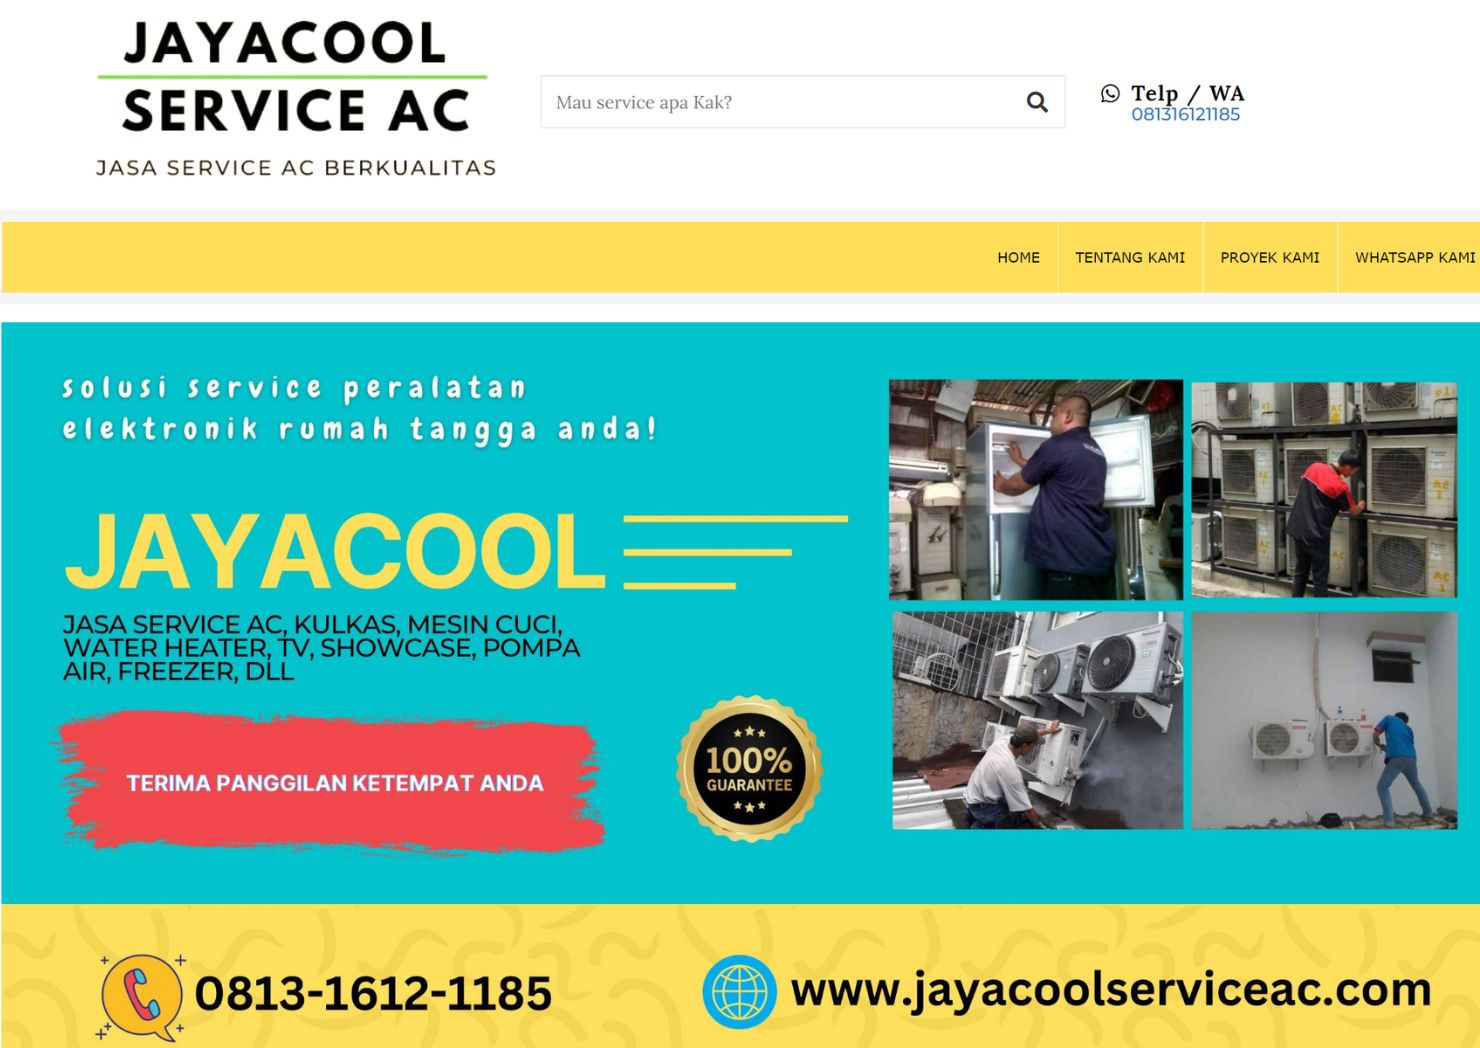 Jayacool Service AC